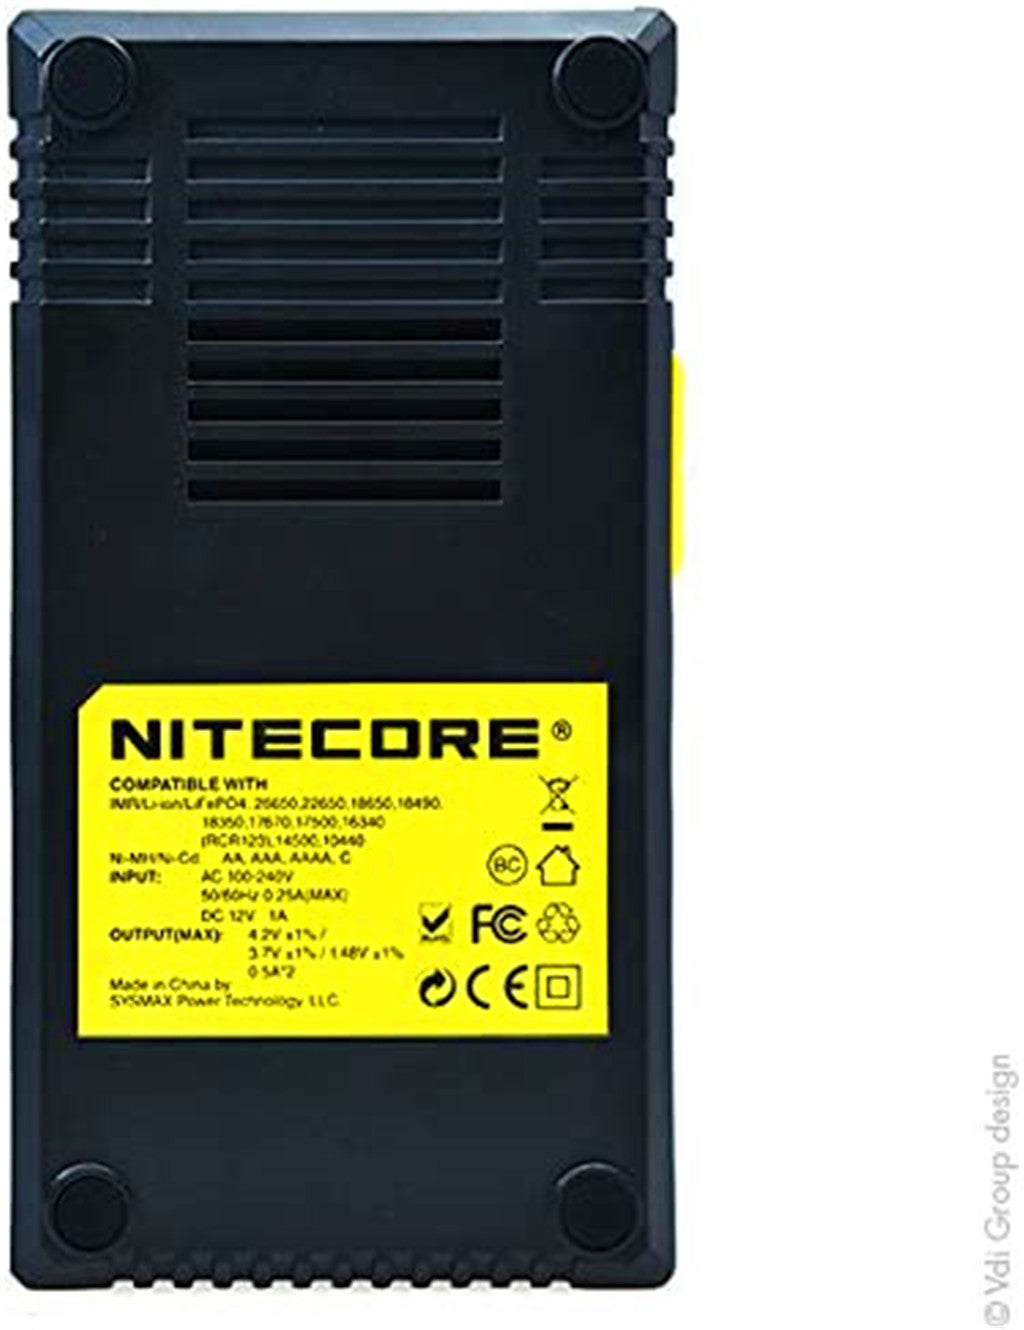 NITECORE D2EU  Universalladegerät für Li-Ion, Ni-MH, Ni-CD und LiFePO4 Akkus, LCD Display